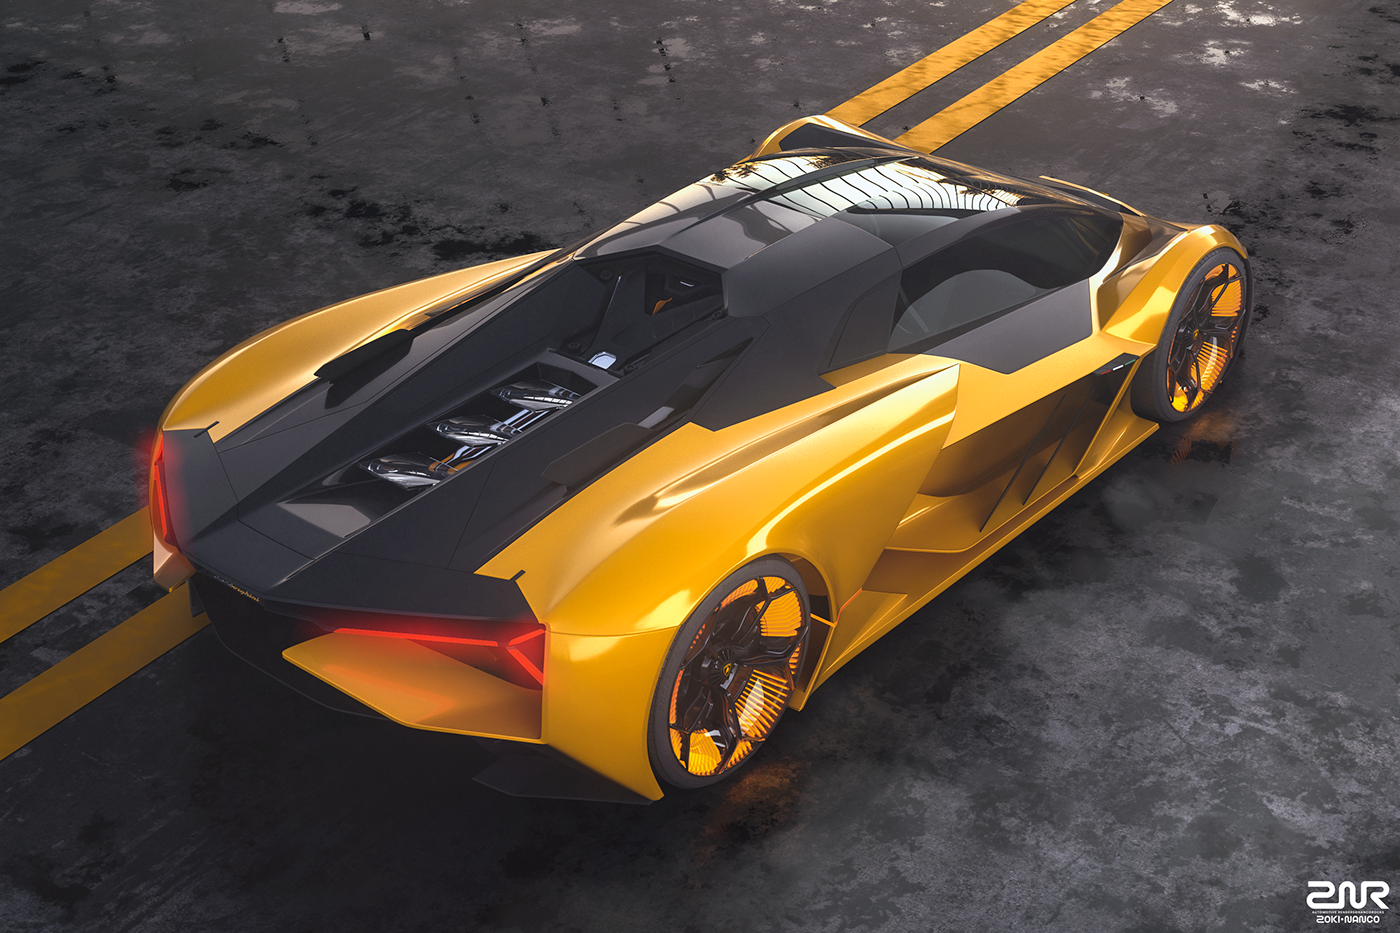 Lamborghini Terzo Millennio on Behance